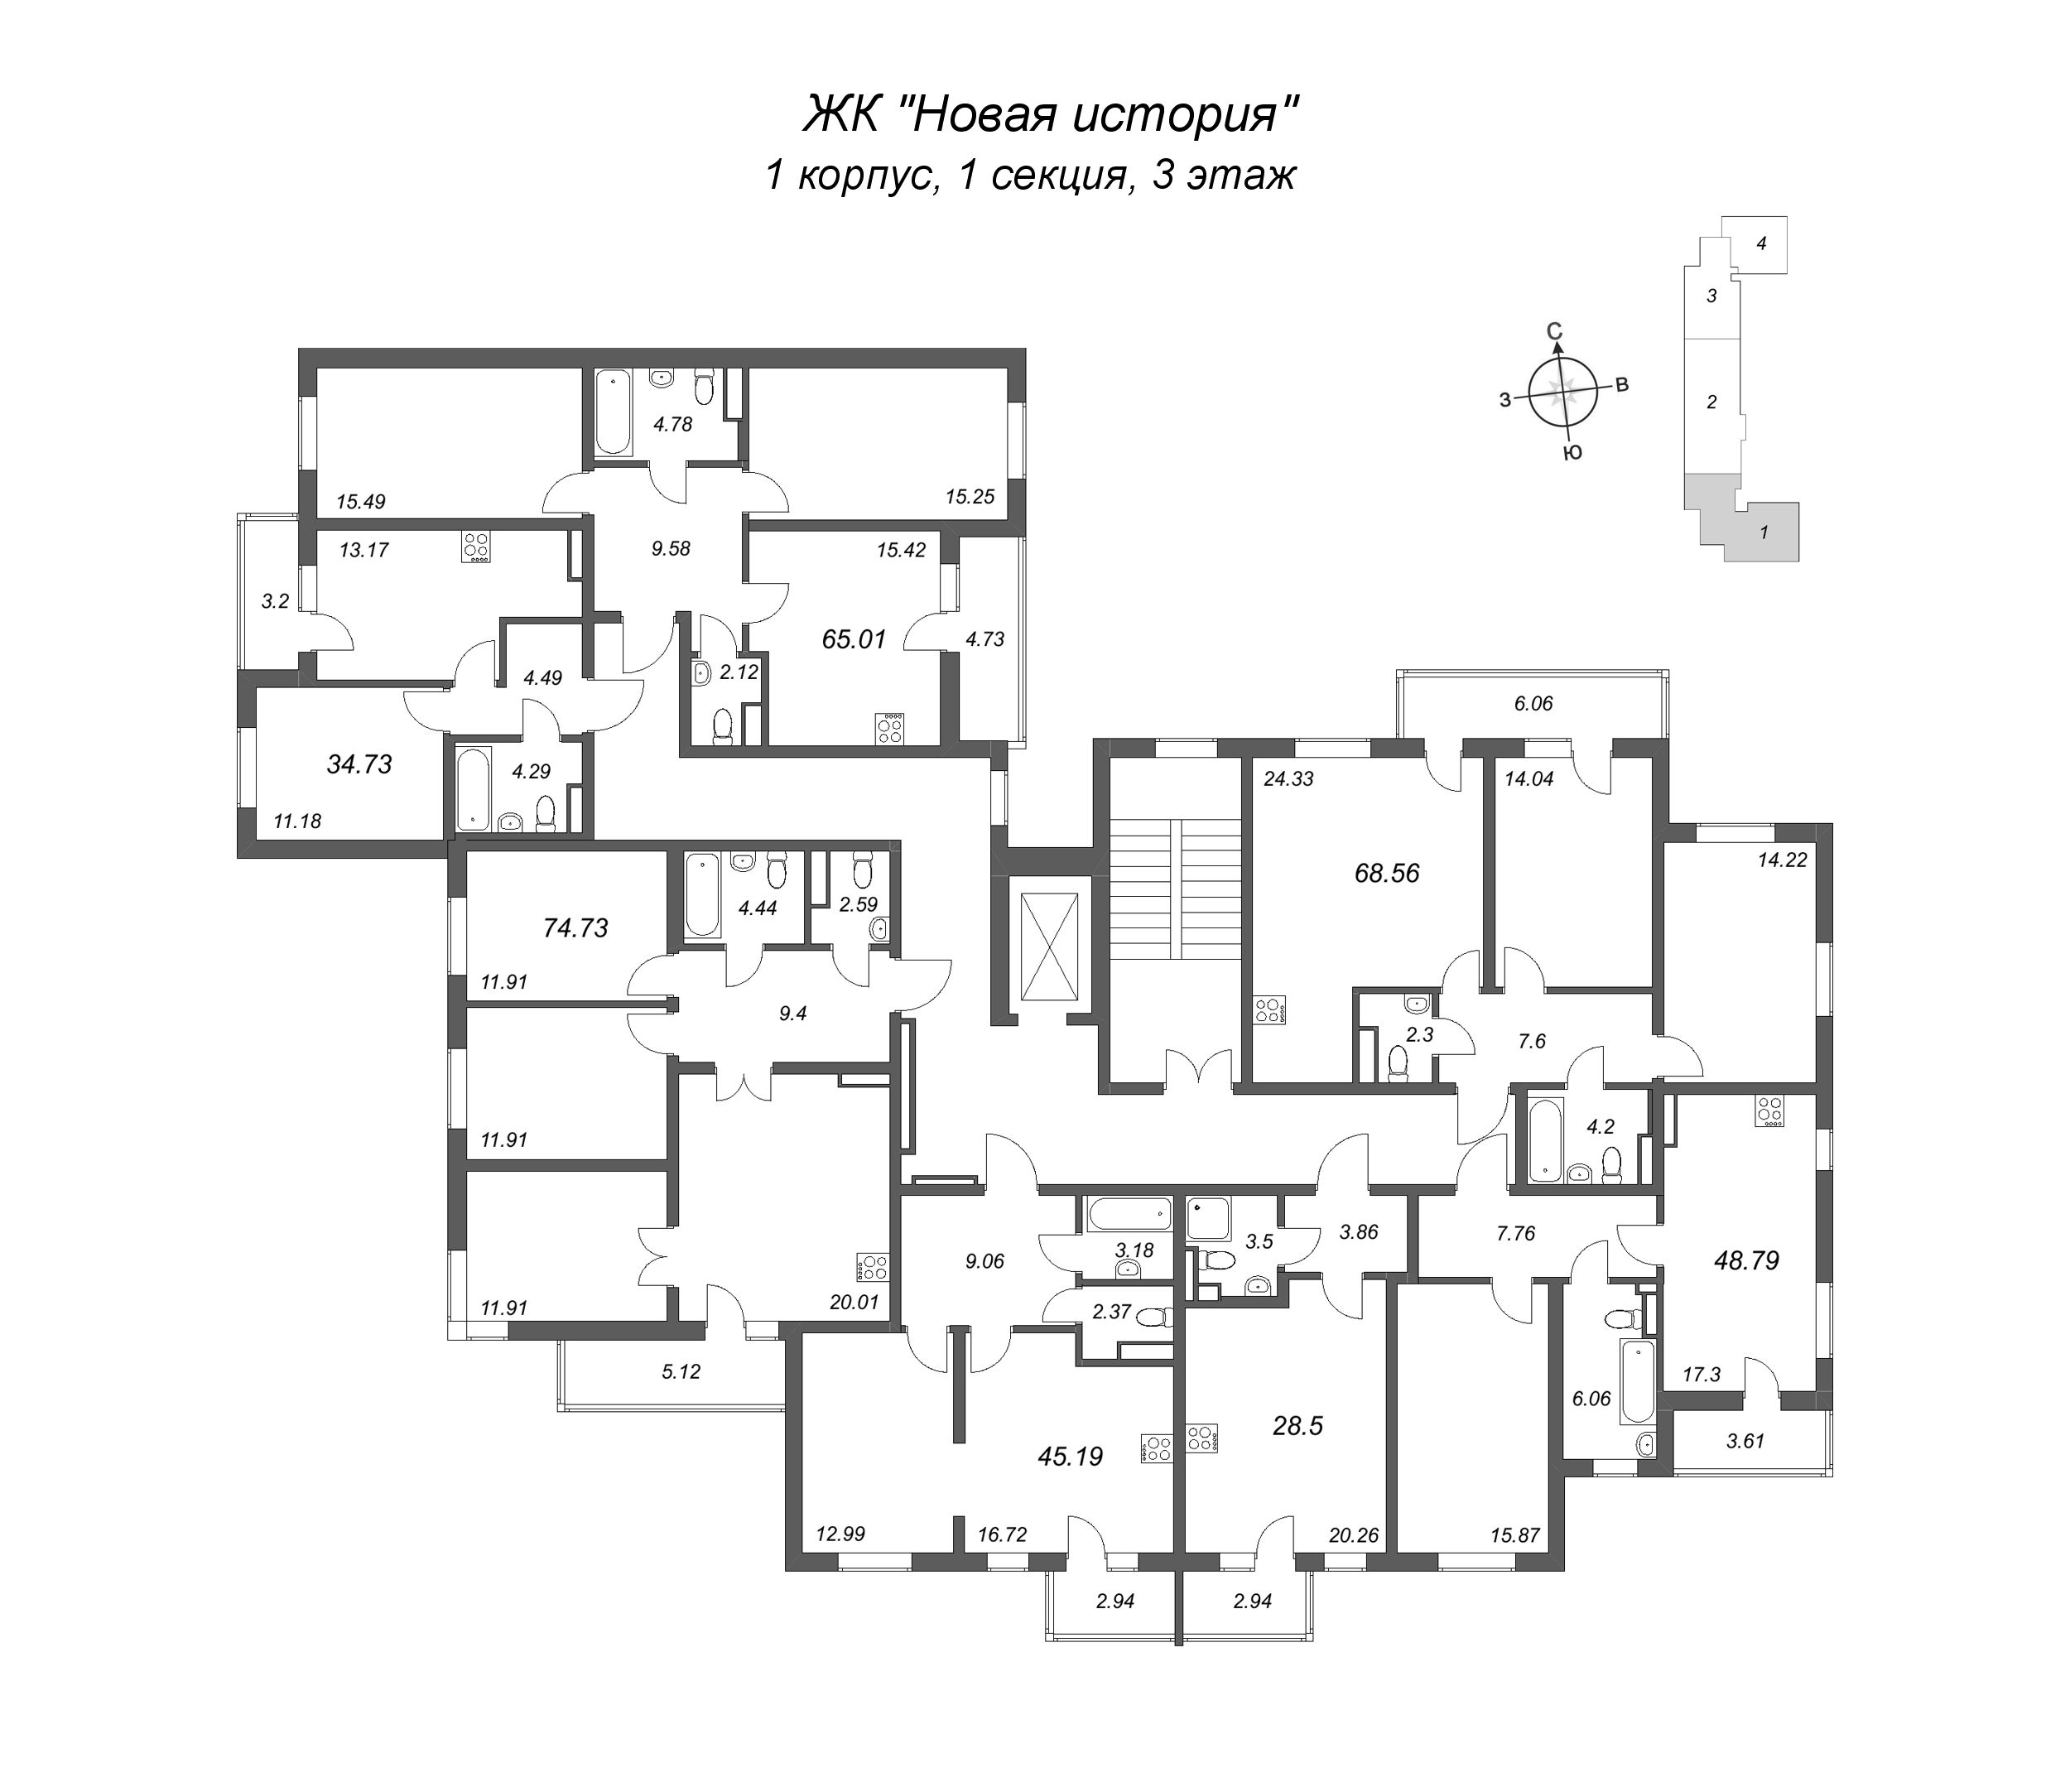 4-комнатная (Евро) квартира, 74.73 м² - планировка этажа